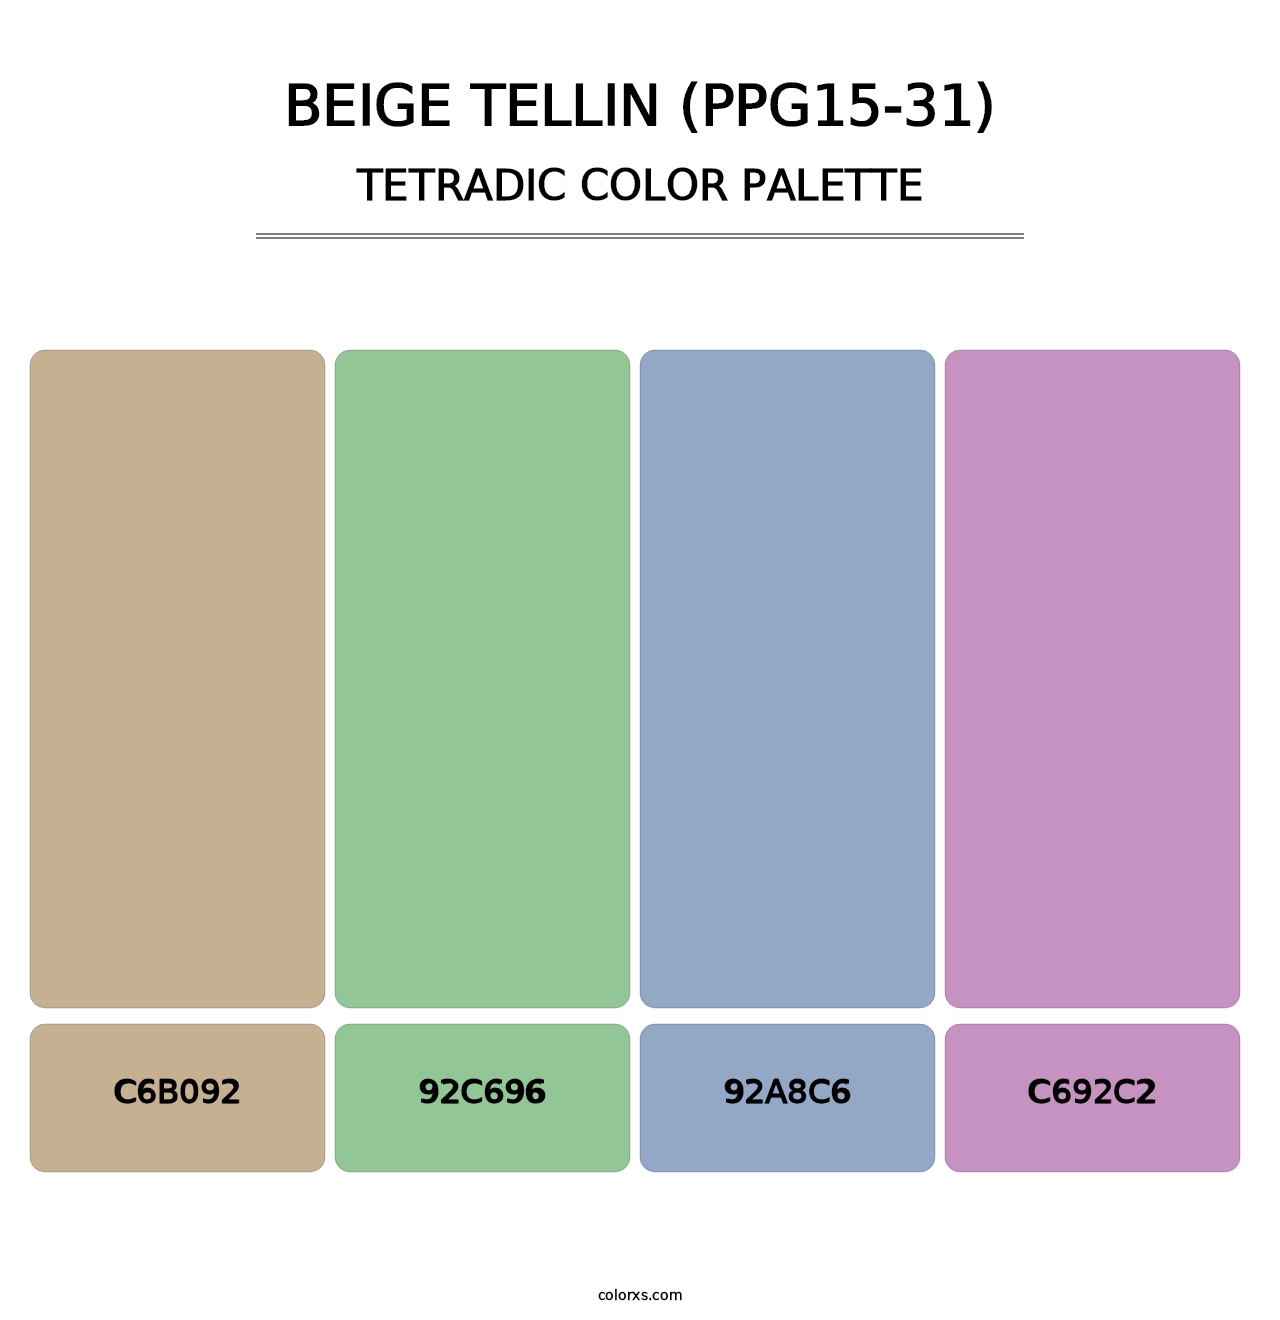 Beige Tellin (PPG15-31) - Tetradic Color Palette